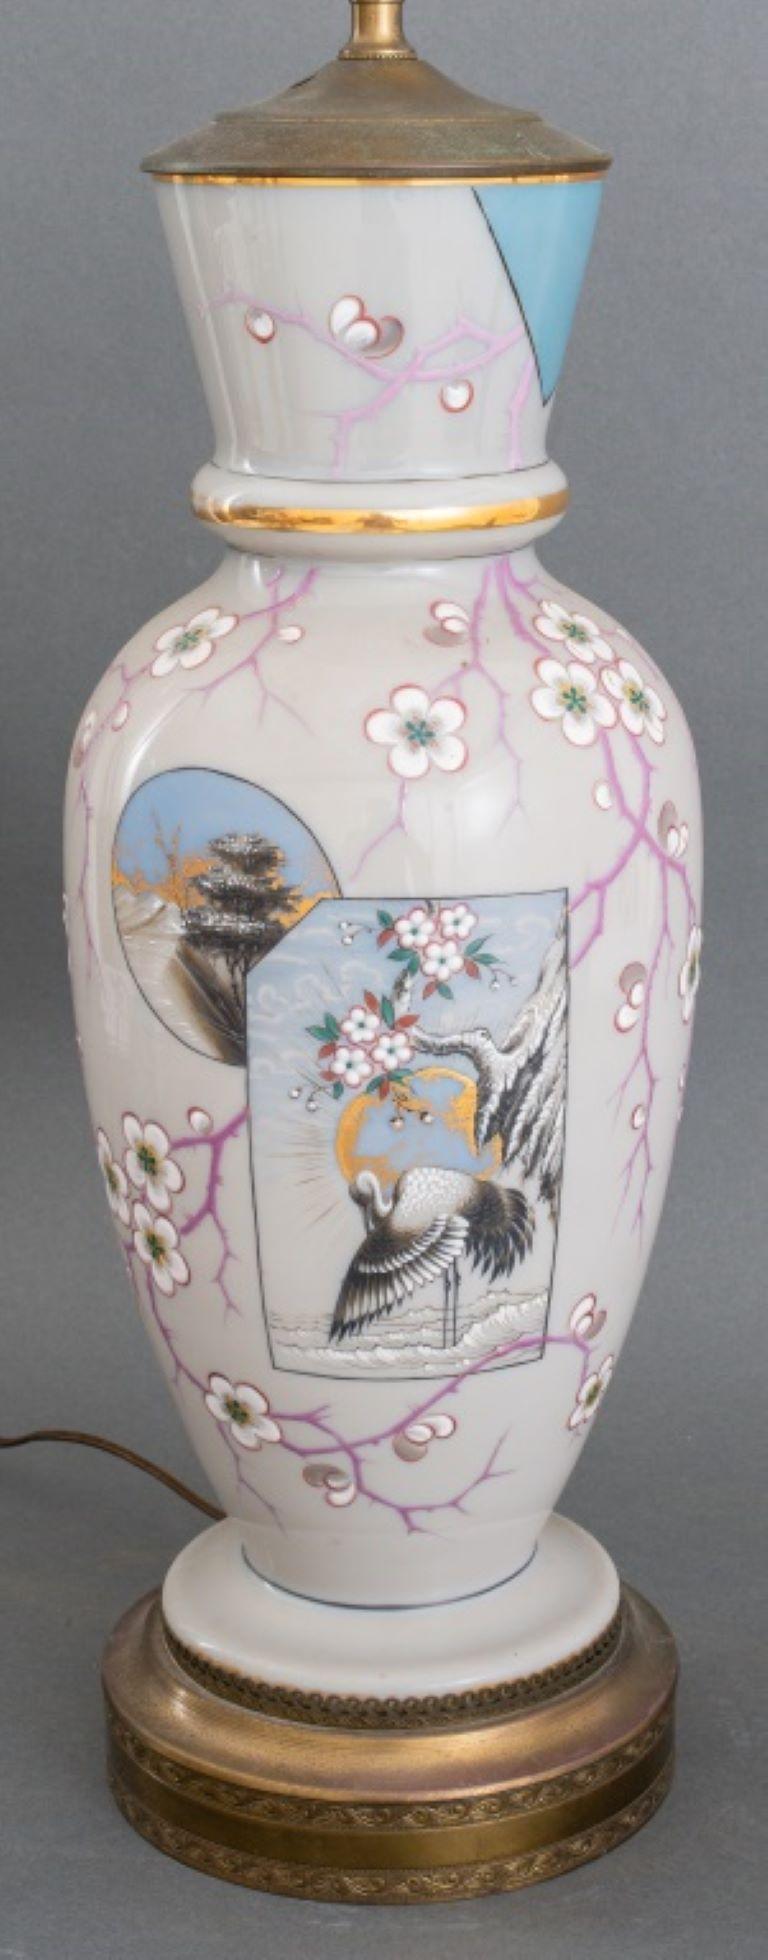 20th Century Aesthetic Movement Porcelain Lamps, Pair For Sale